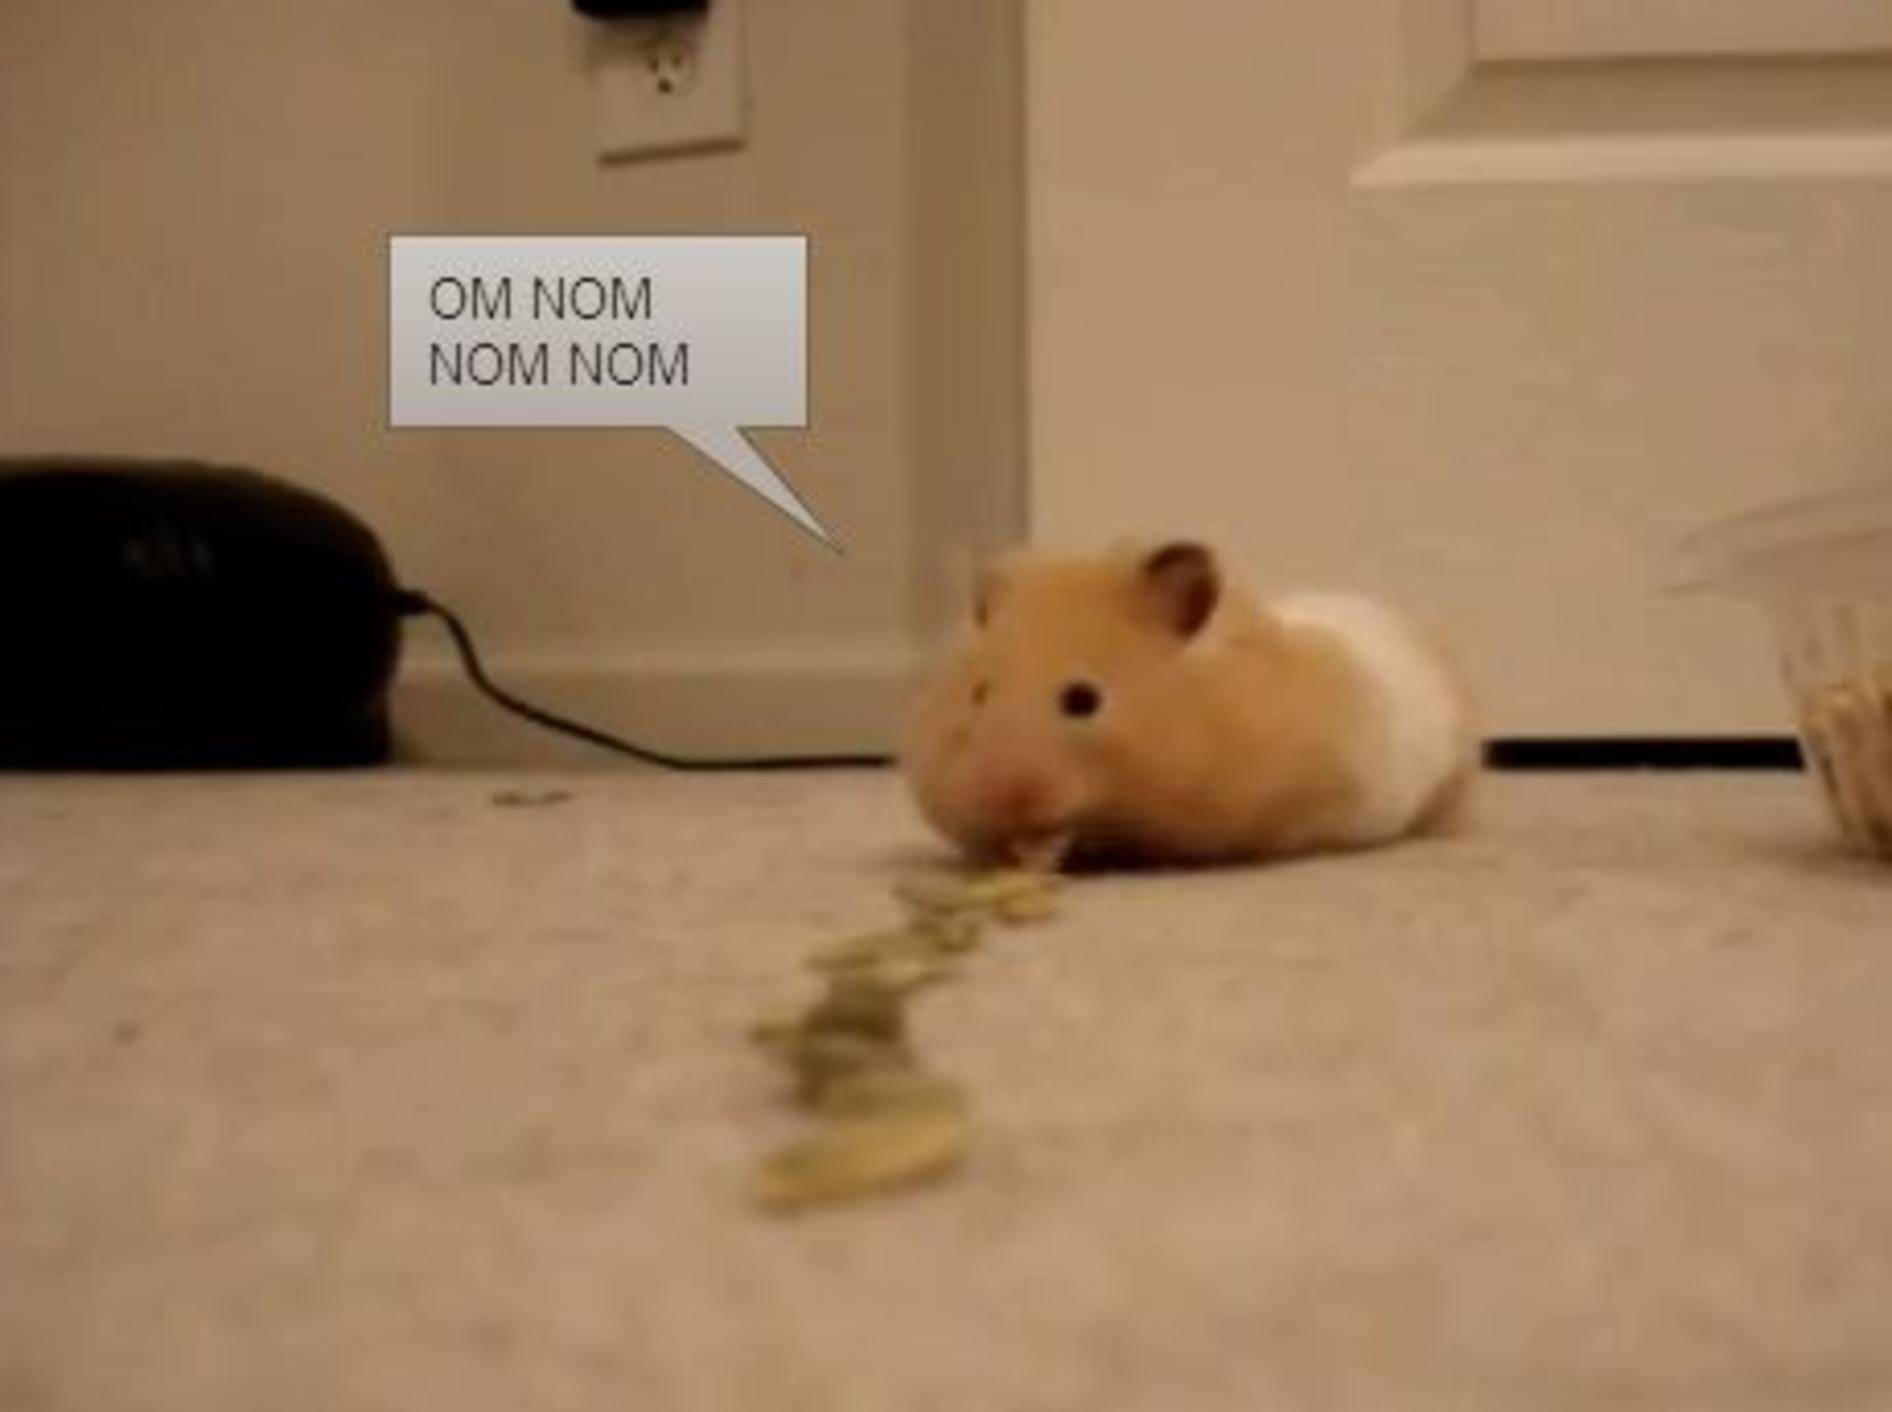 Süßer Hamster spielt Backentaschen-Staubsauger — Bild: Youtube / lumpymangos